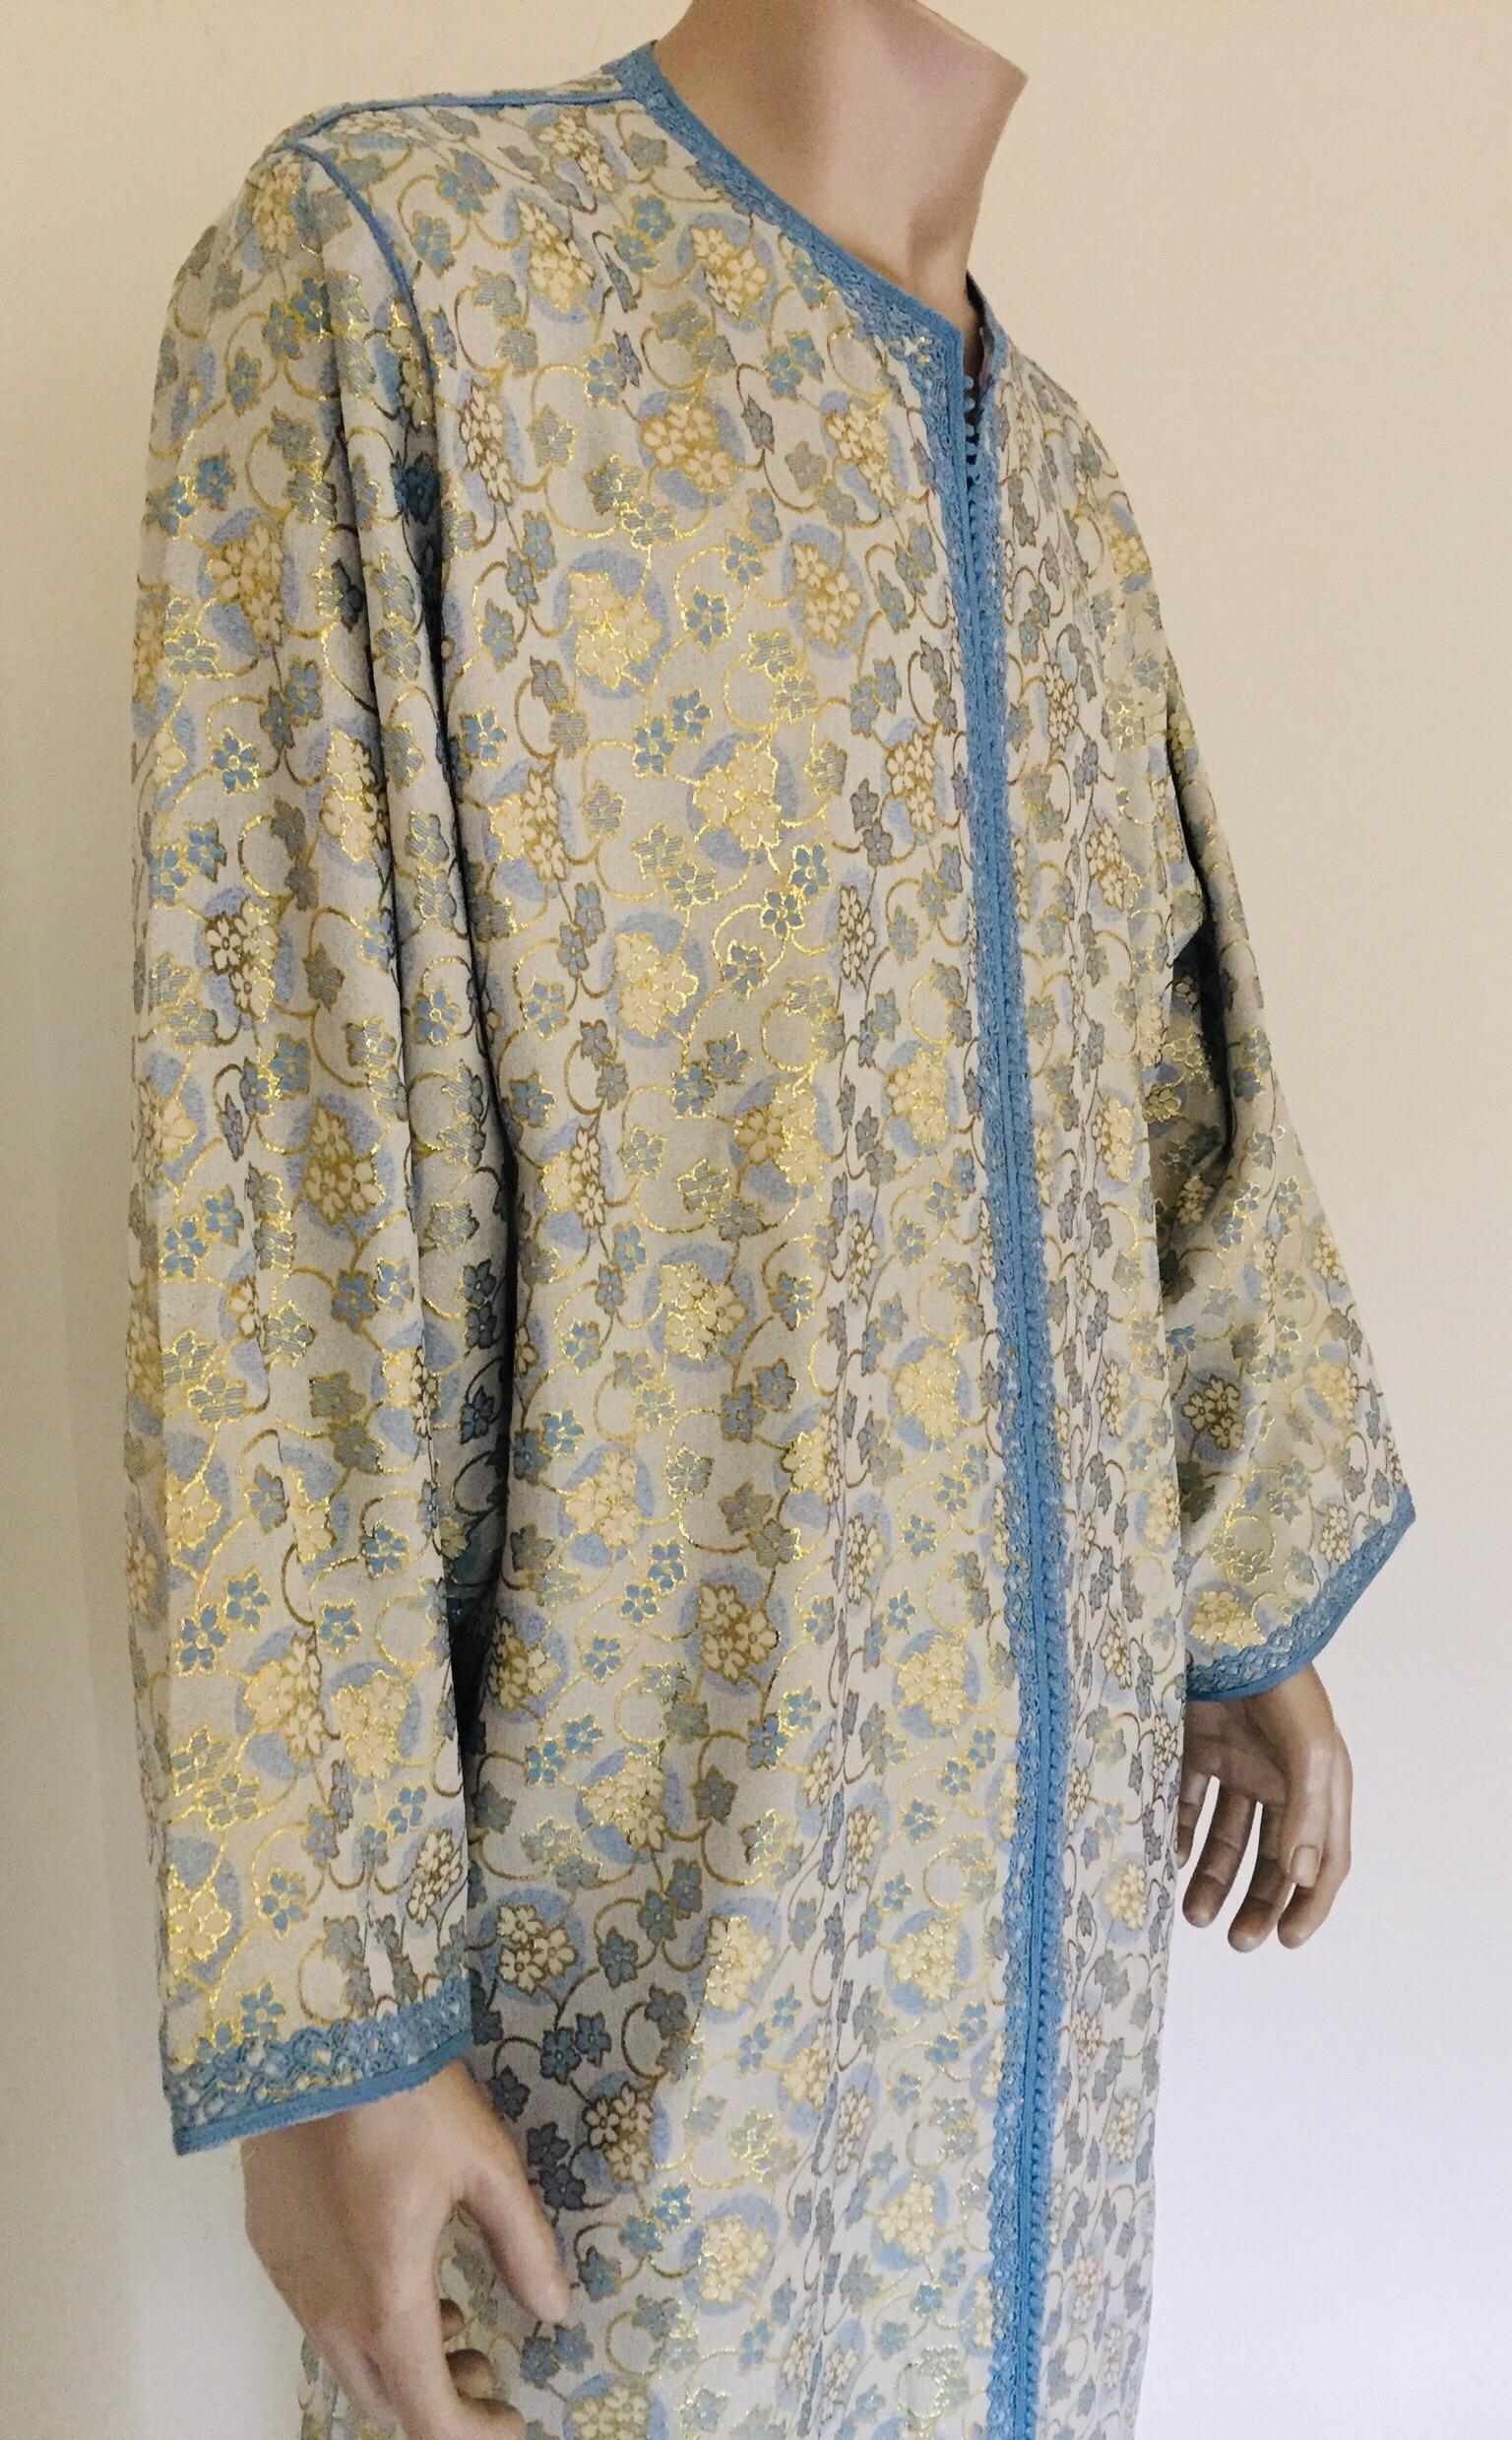 Metallic Blue and Silver Brocade 1970s Maxi Dress Caftan, Evening Gown Kaftan For Sale 4